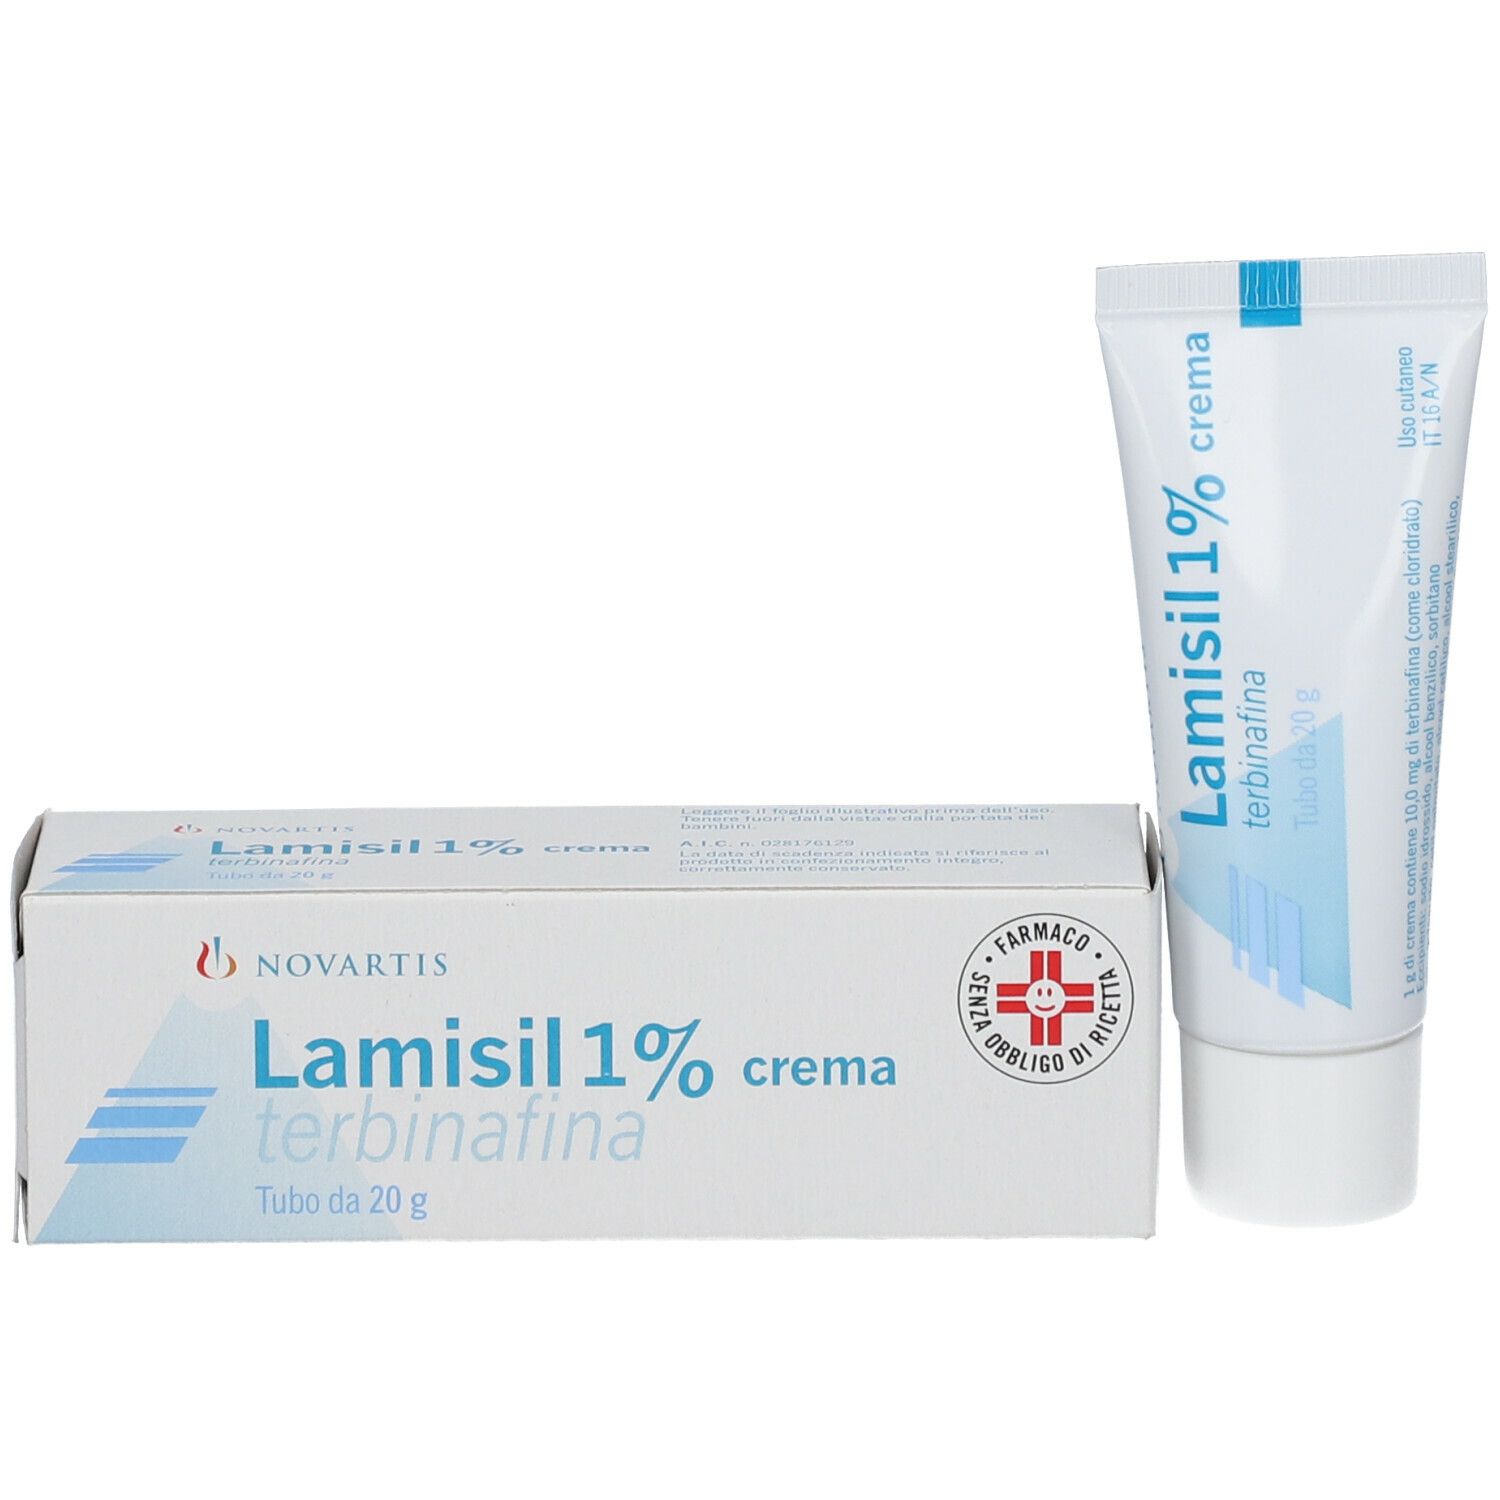 Lamisil 1% crema